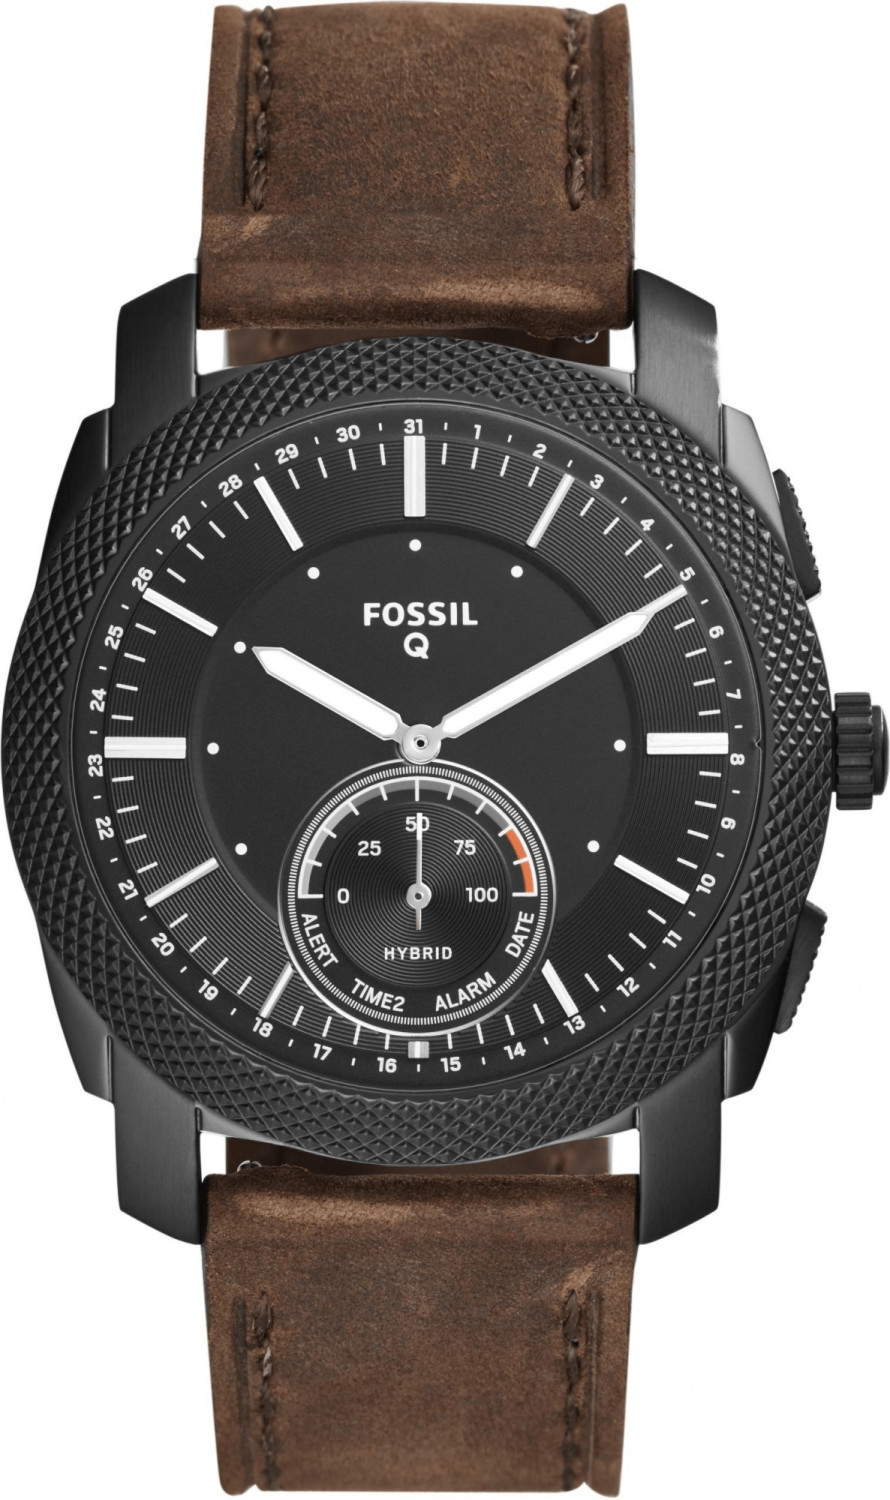 Buy Fossil Q Machine dark brown from £148.99 (Today) – Best Deals on ...